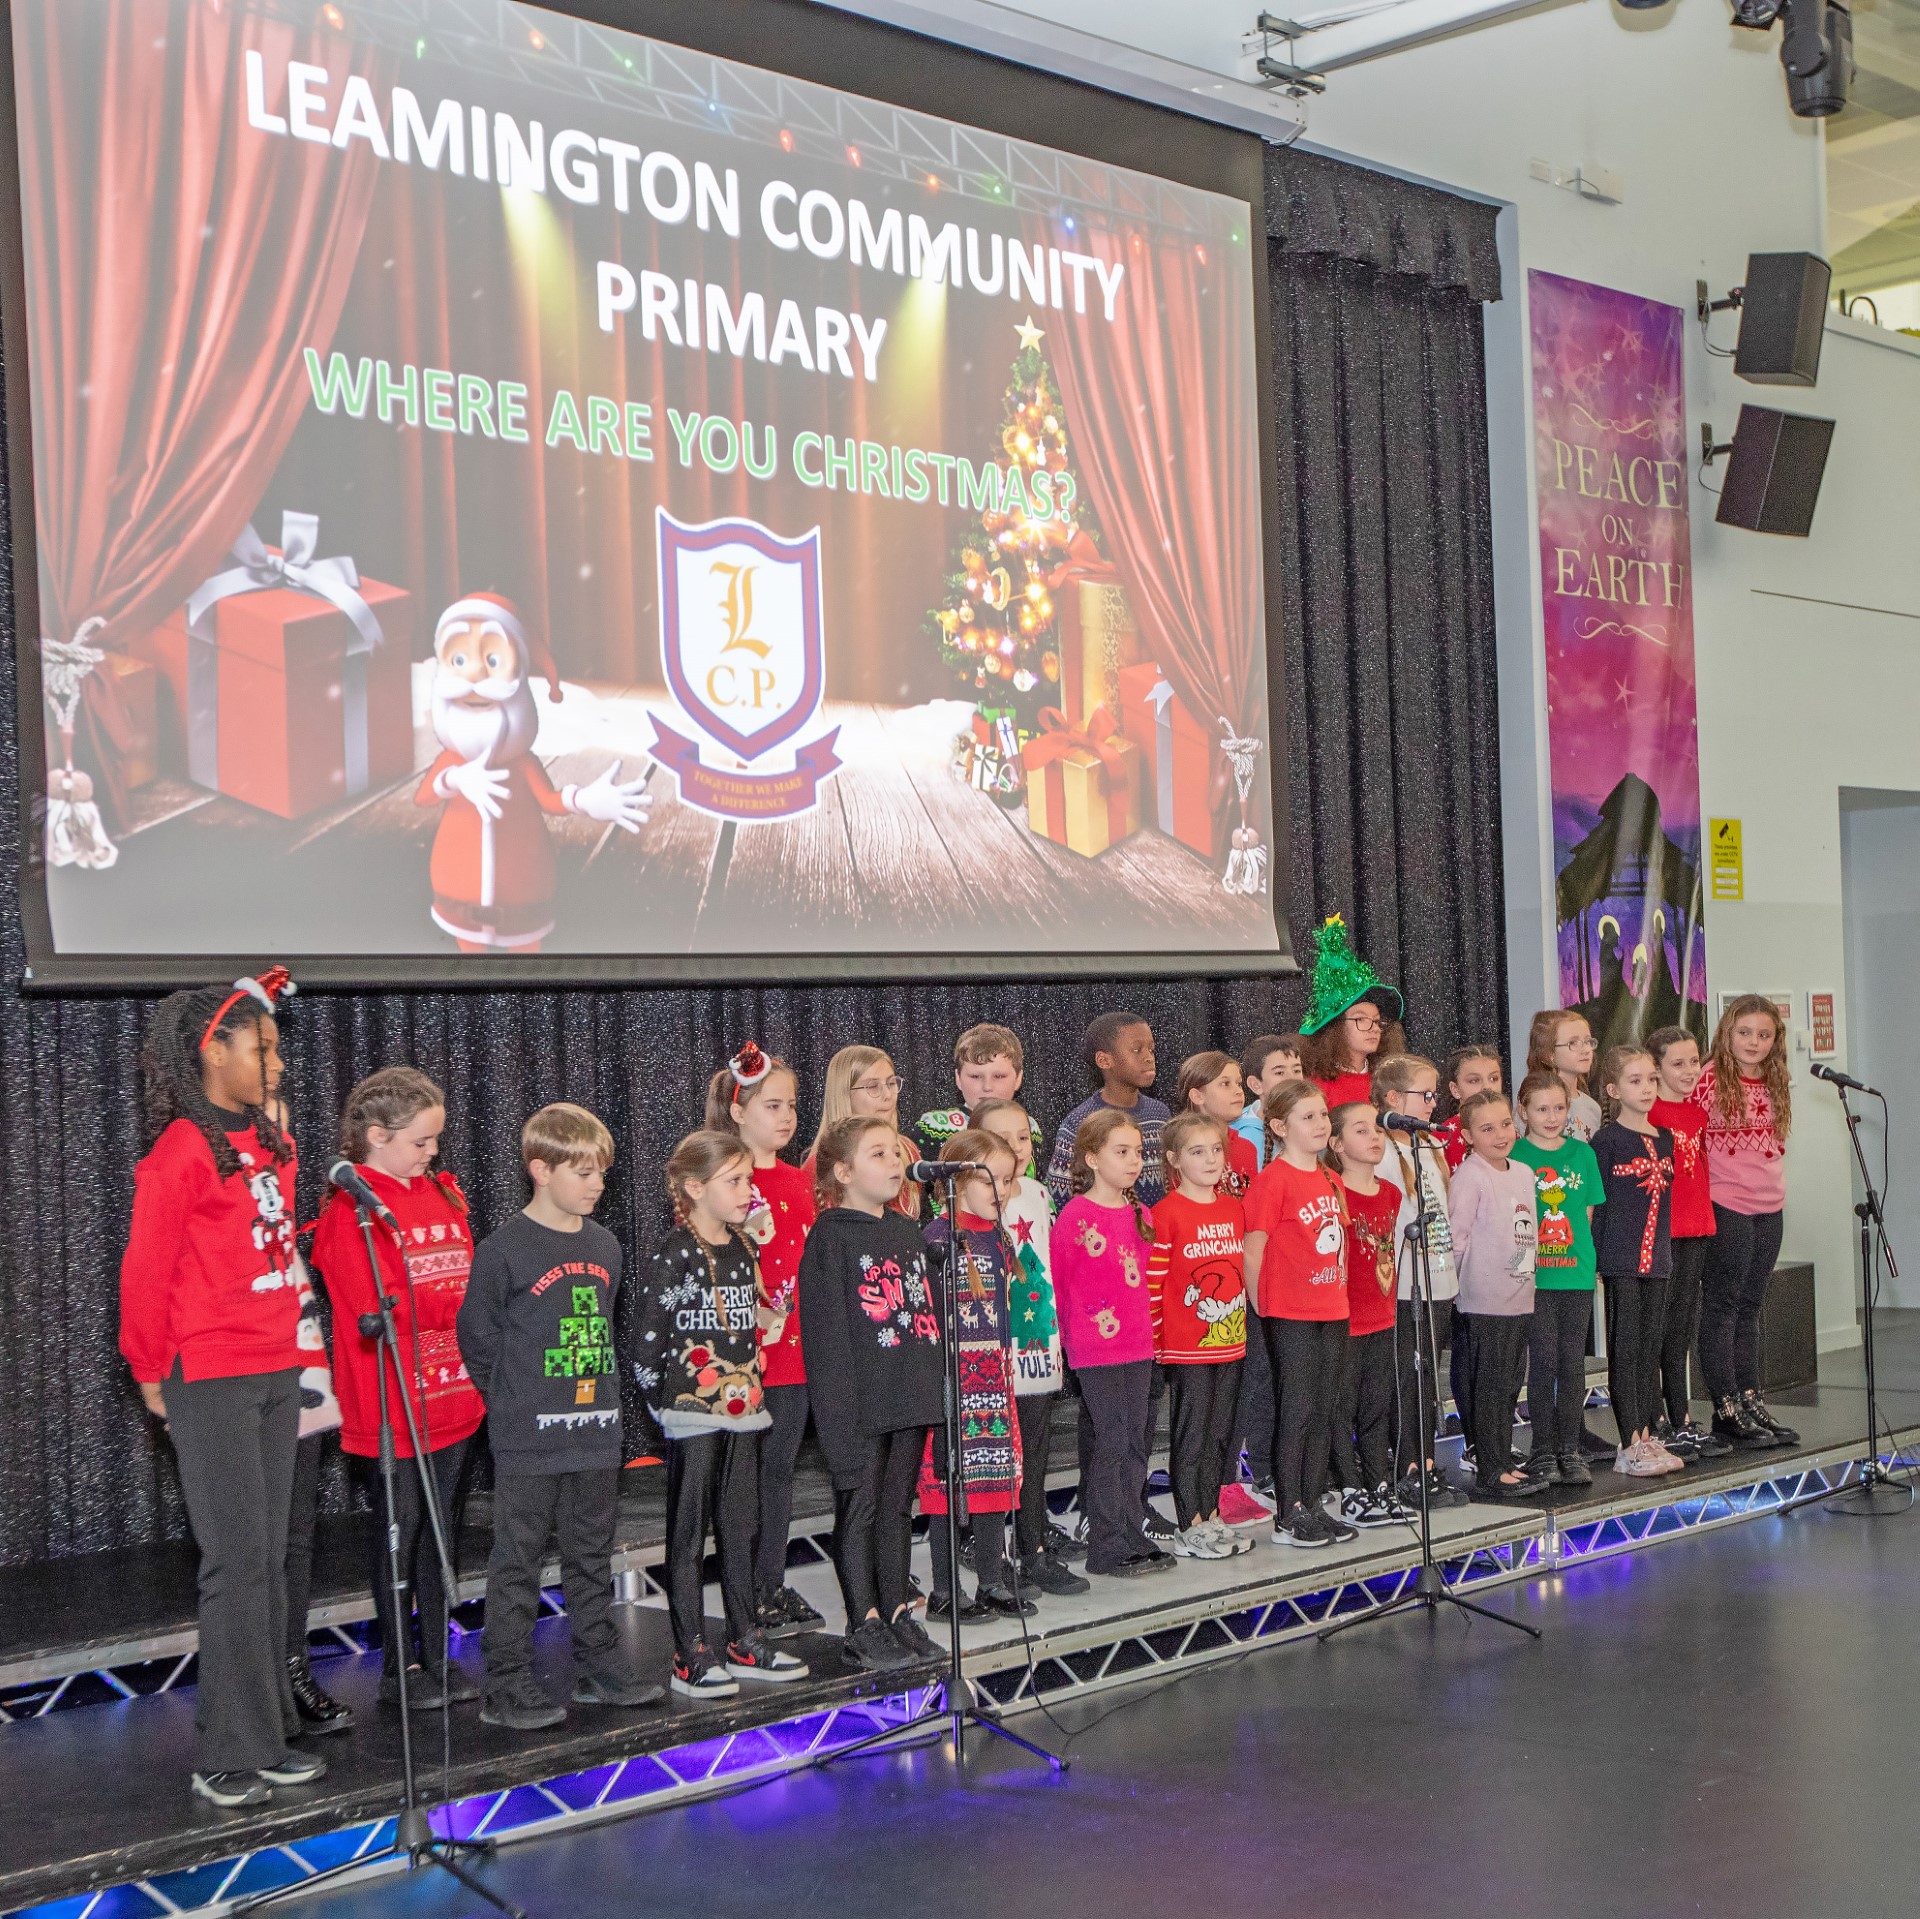 Leamington Community Primary sang Where Are You Christmas